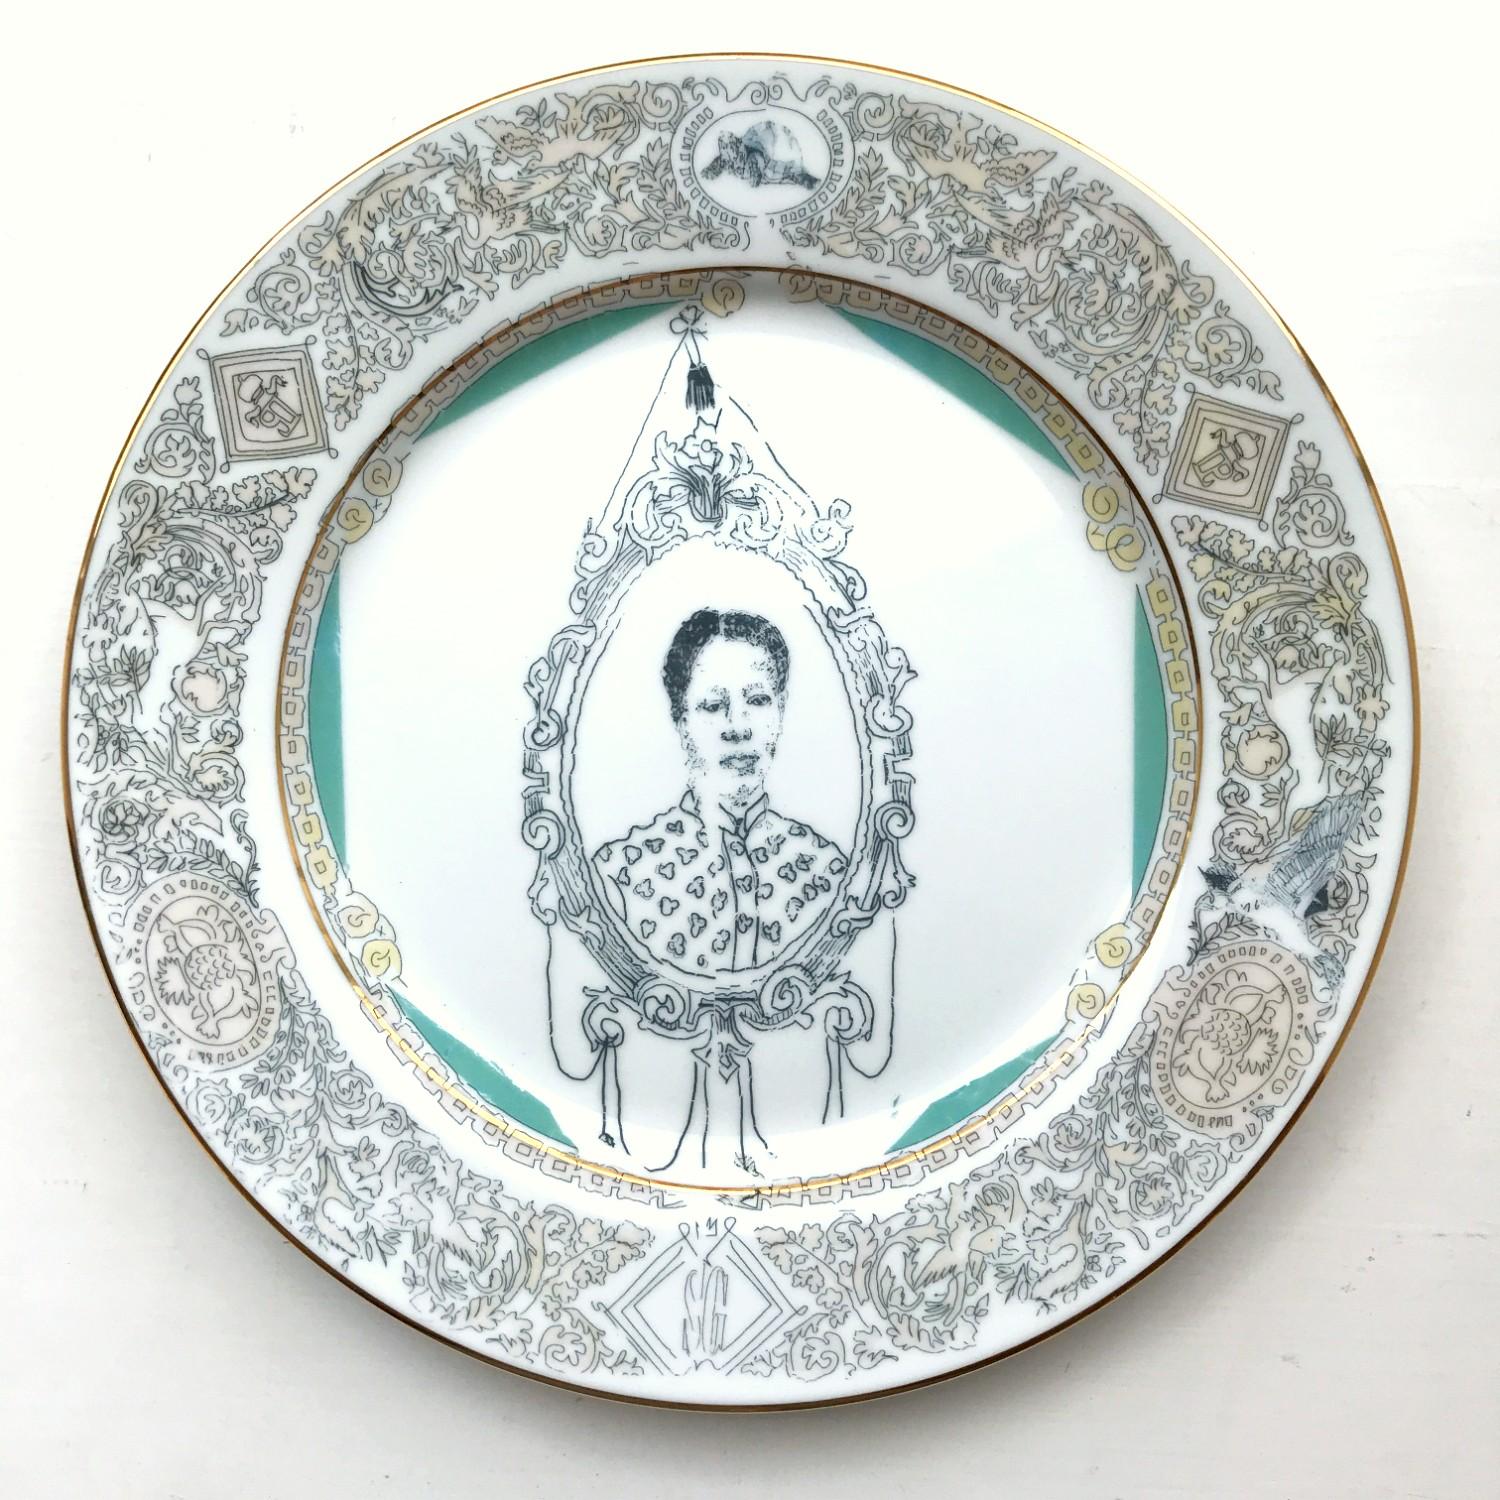 Contemporary Porcelain Dinner Plate by Roberto Lugo